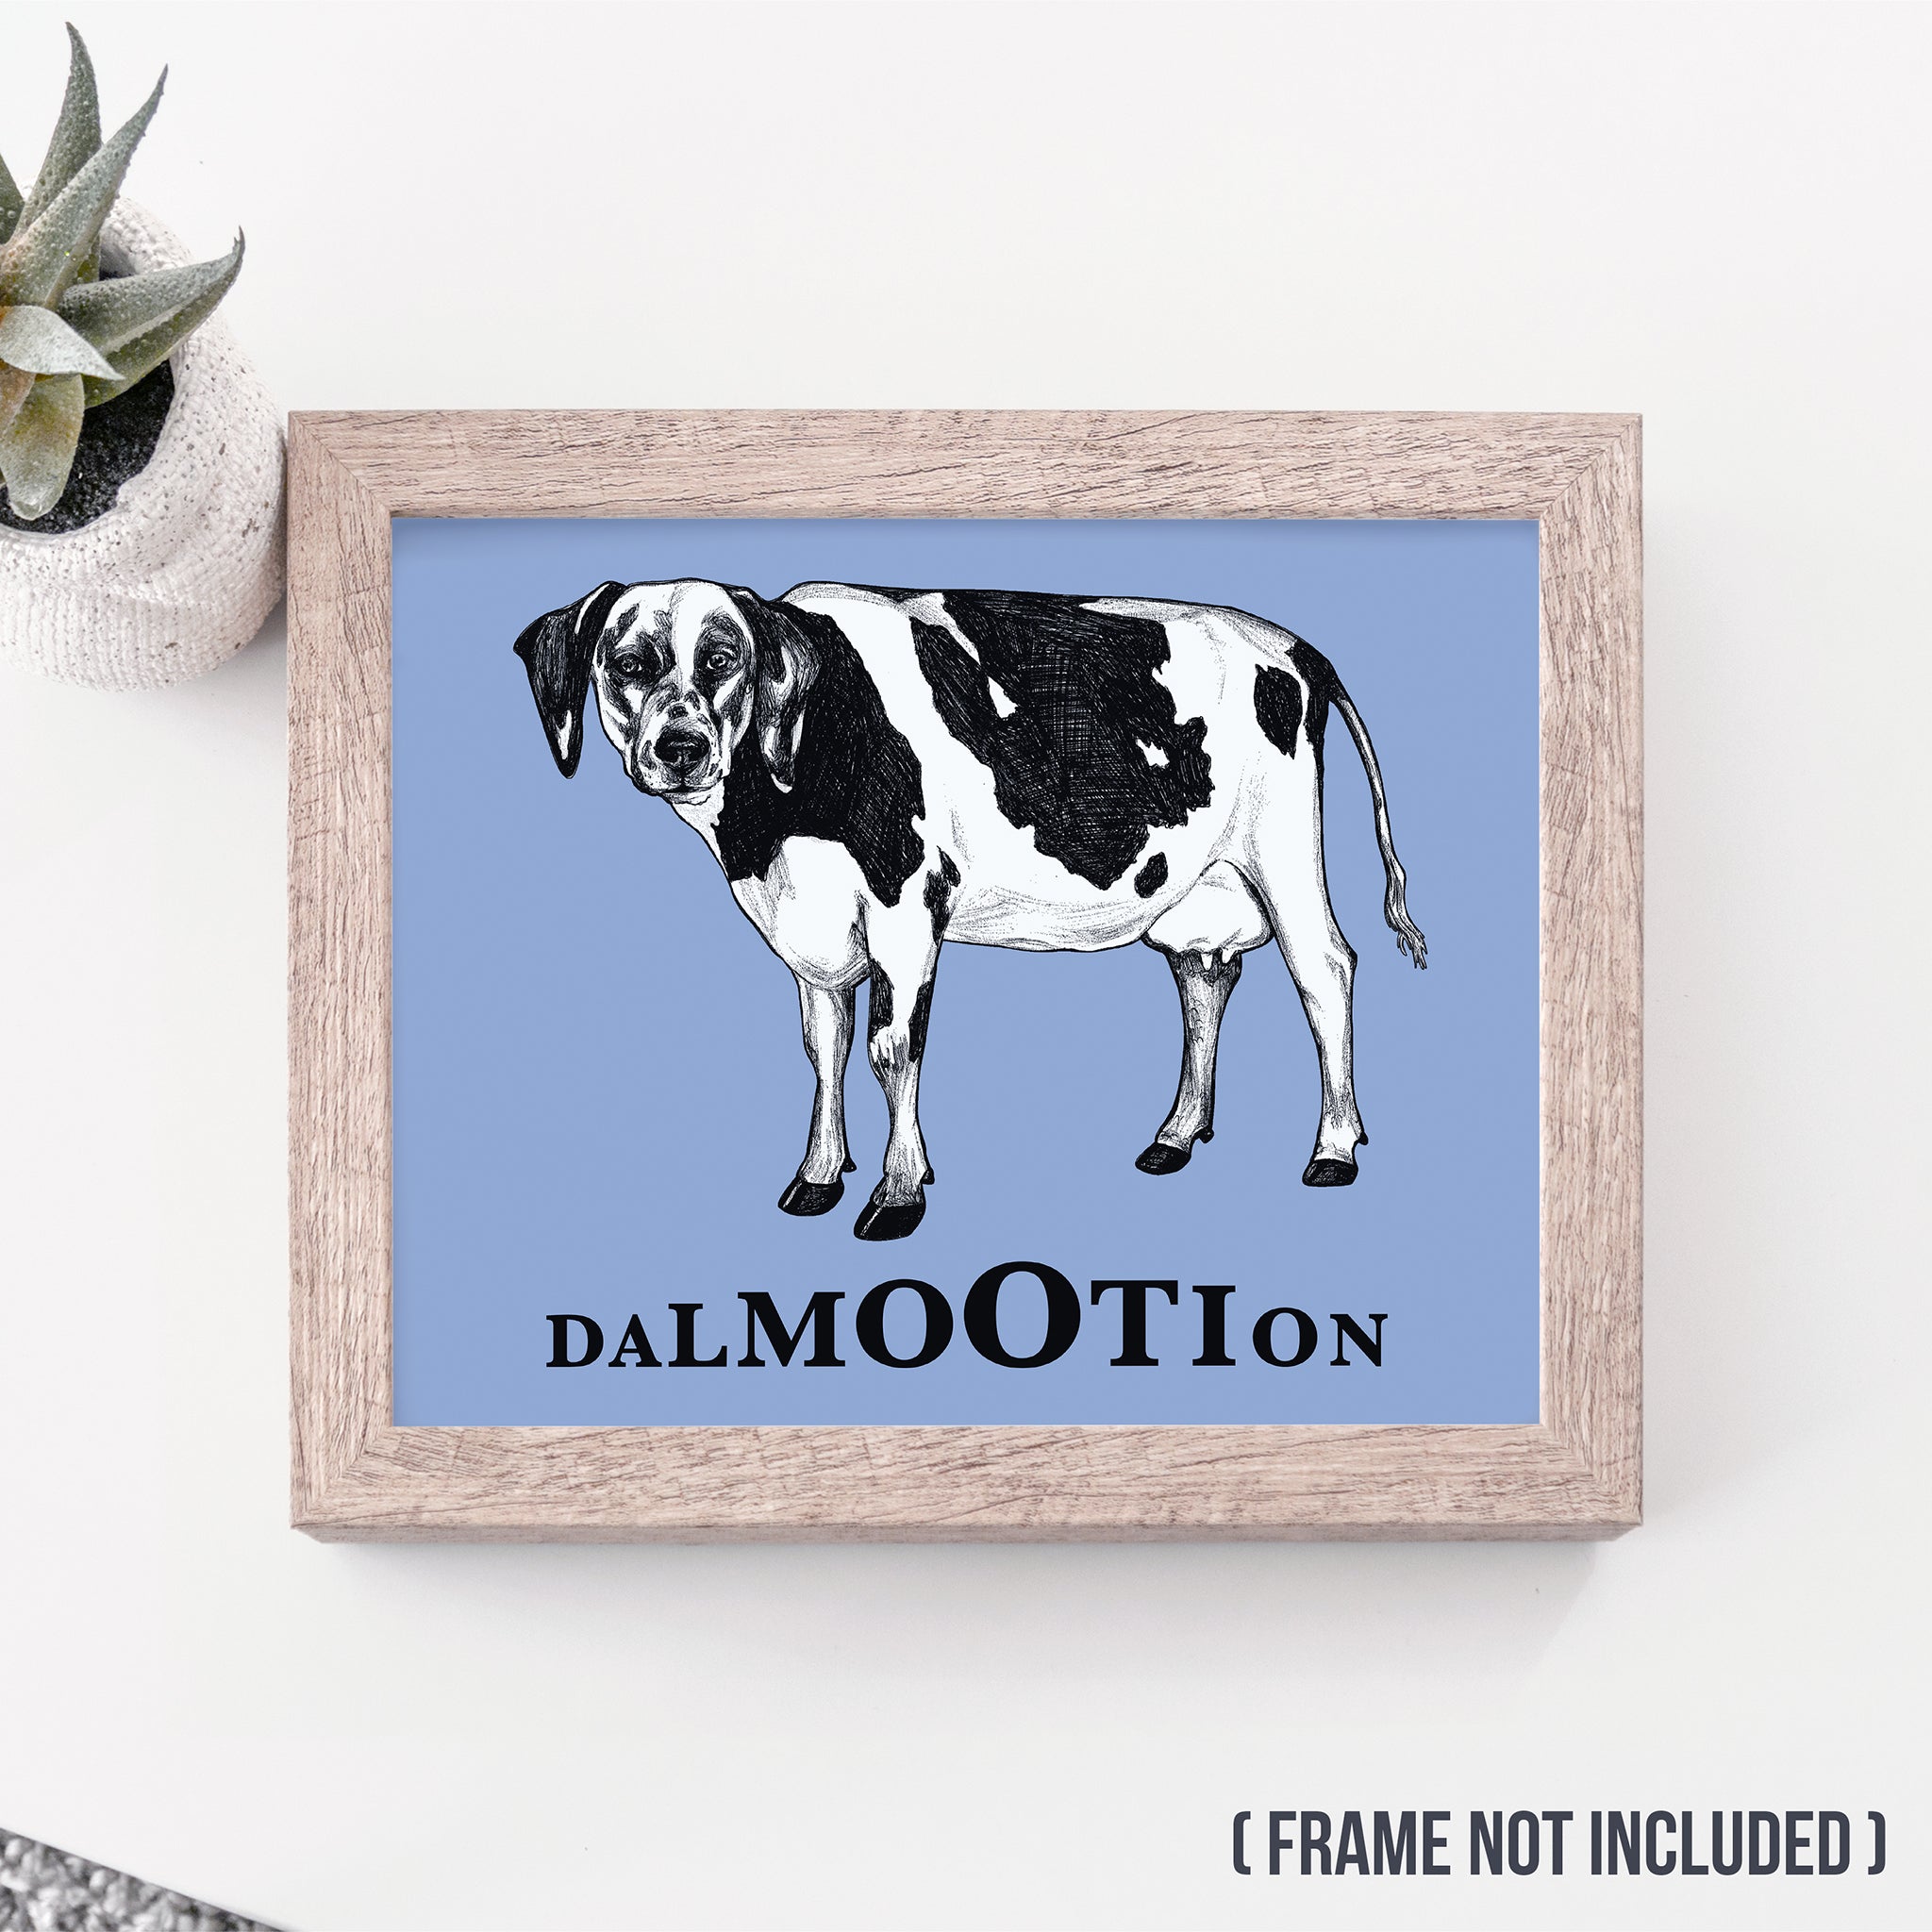 Dalmootion 8x10" Art Print